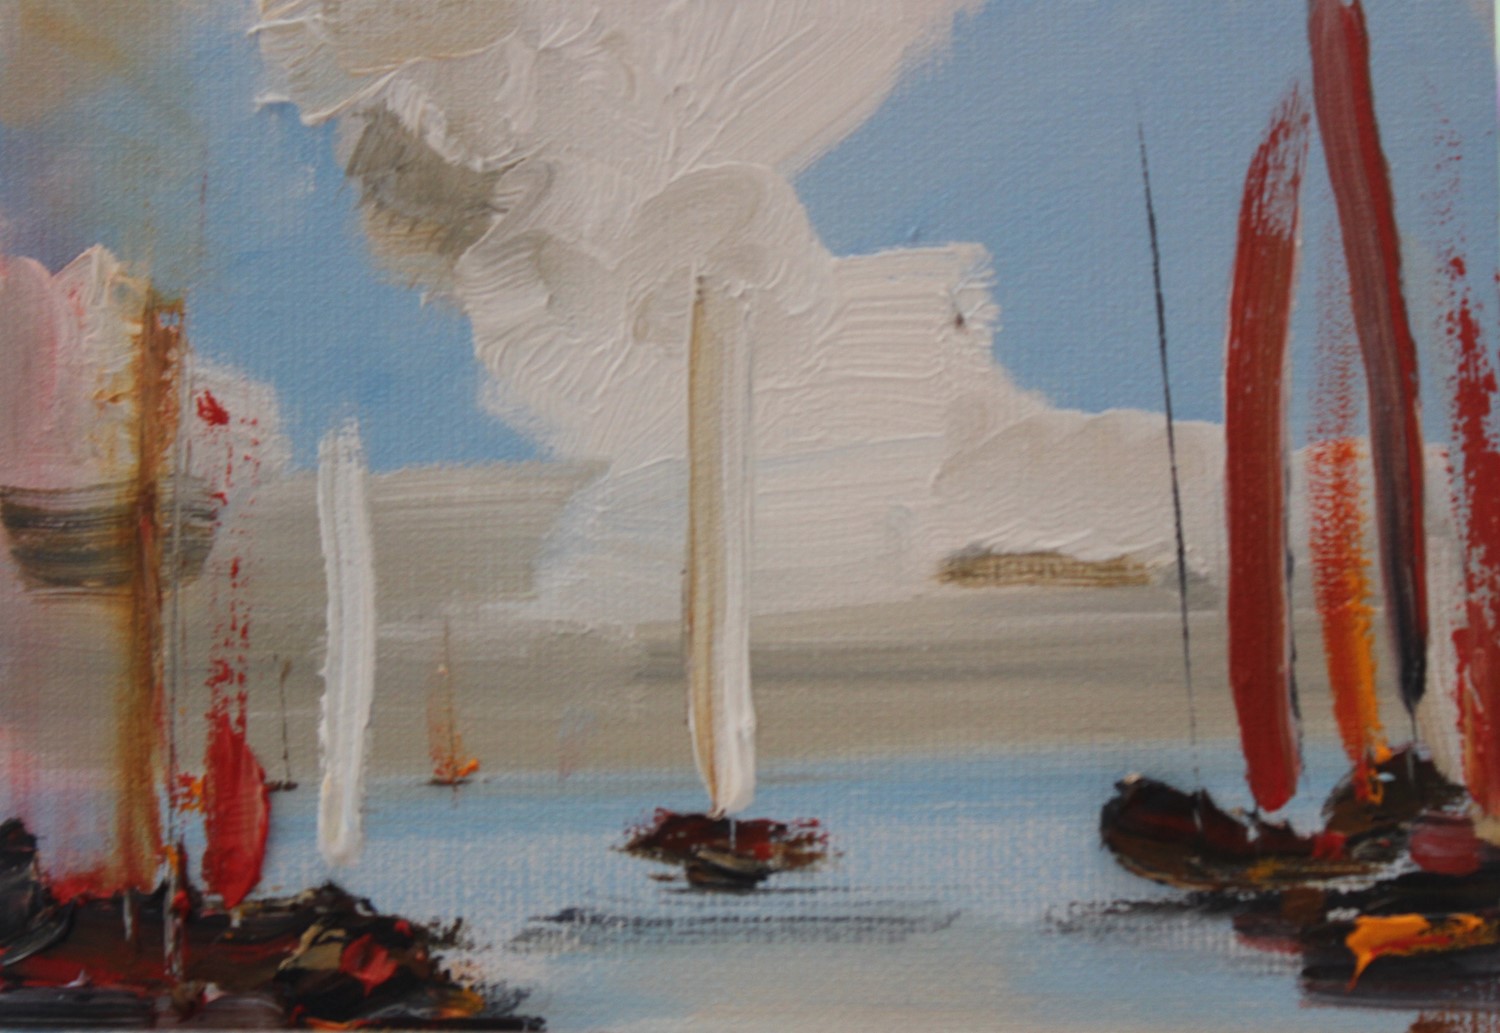 'Sails and Sun' by artist Rosanne Barr